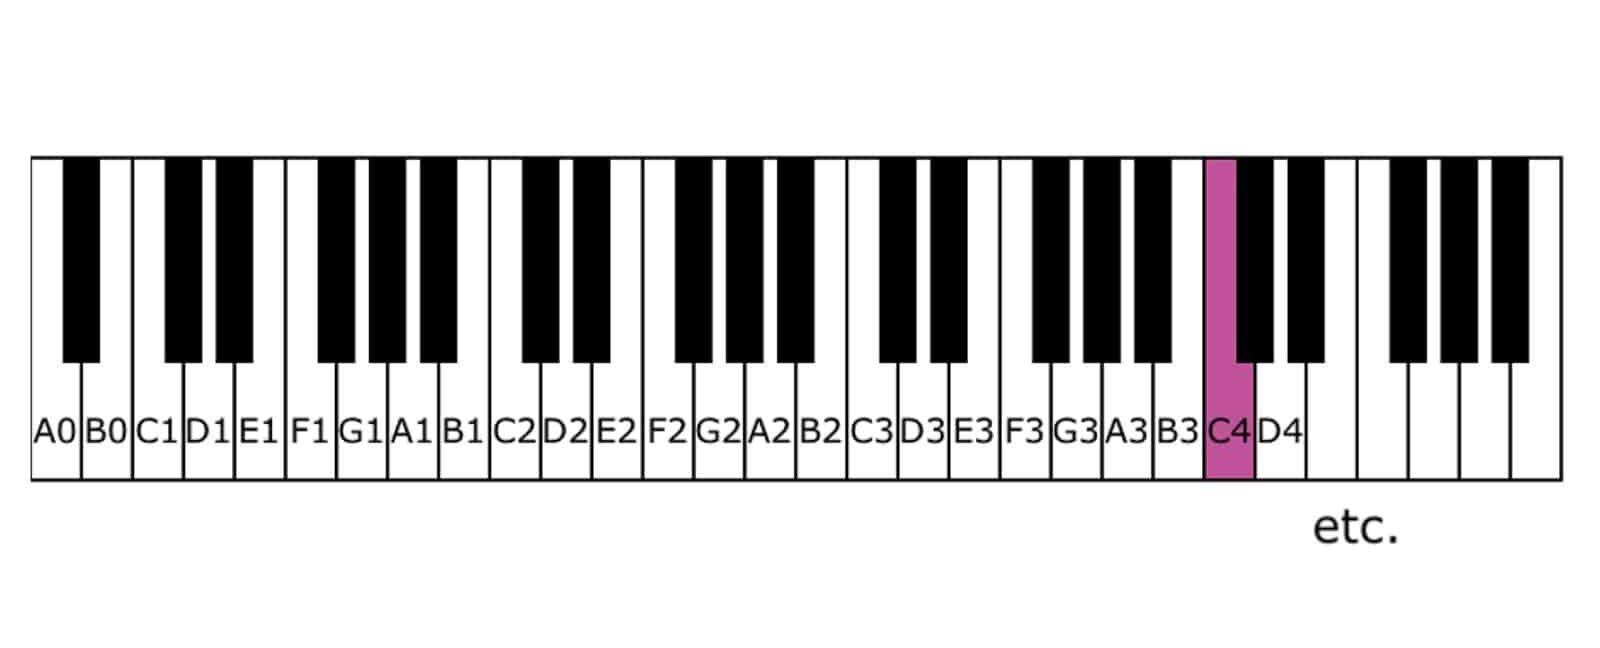 Standard piano keyboards start at A0